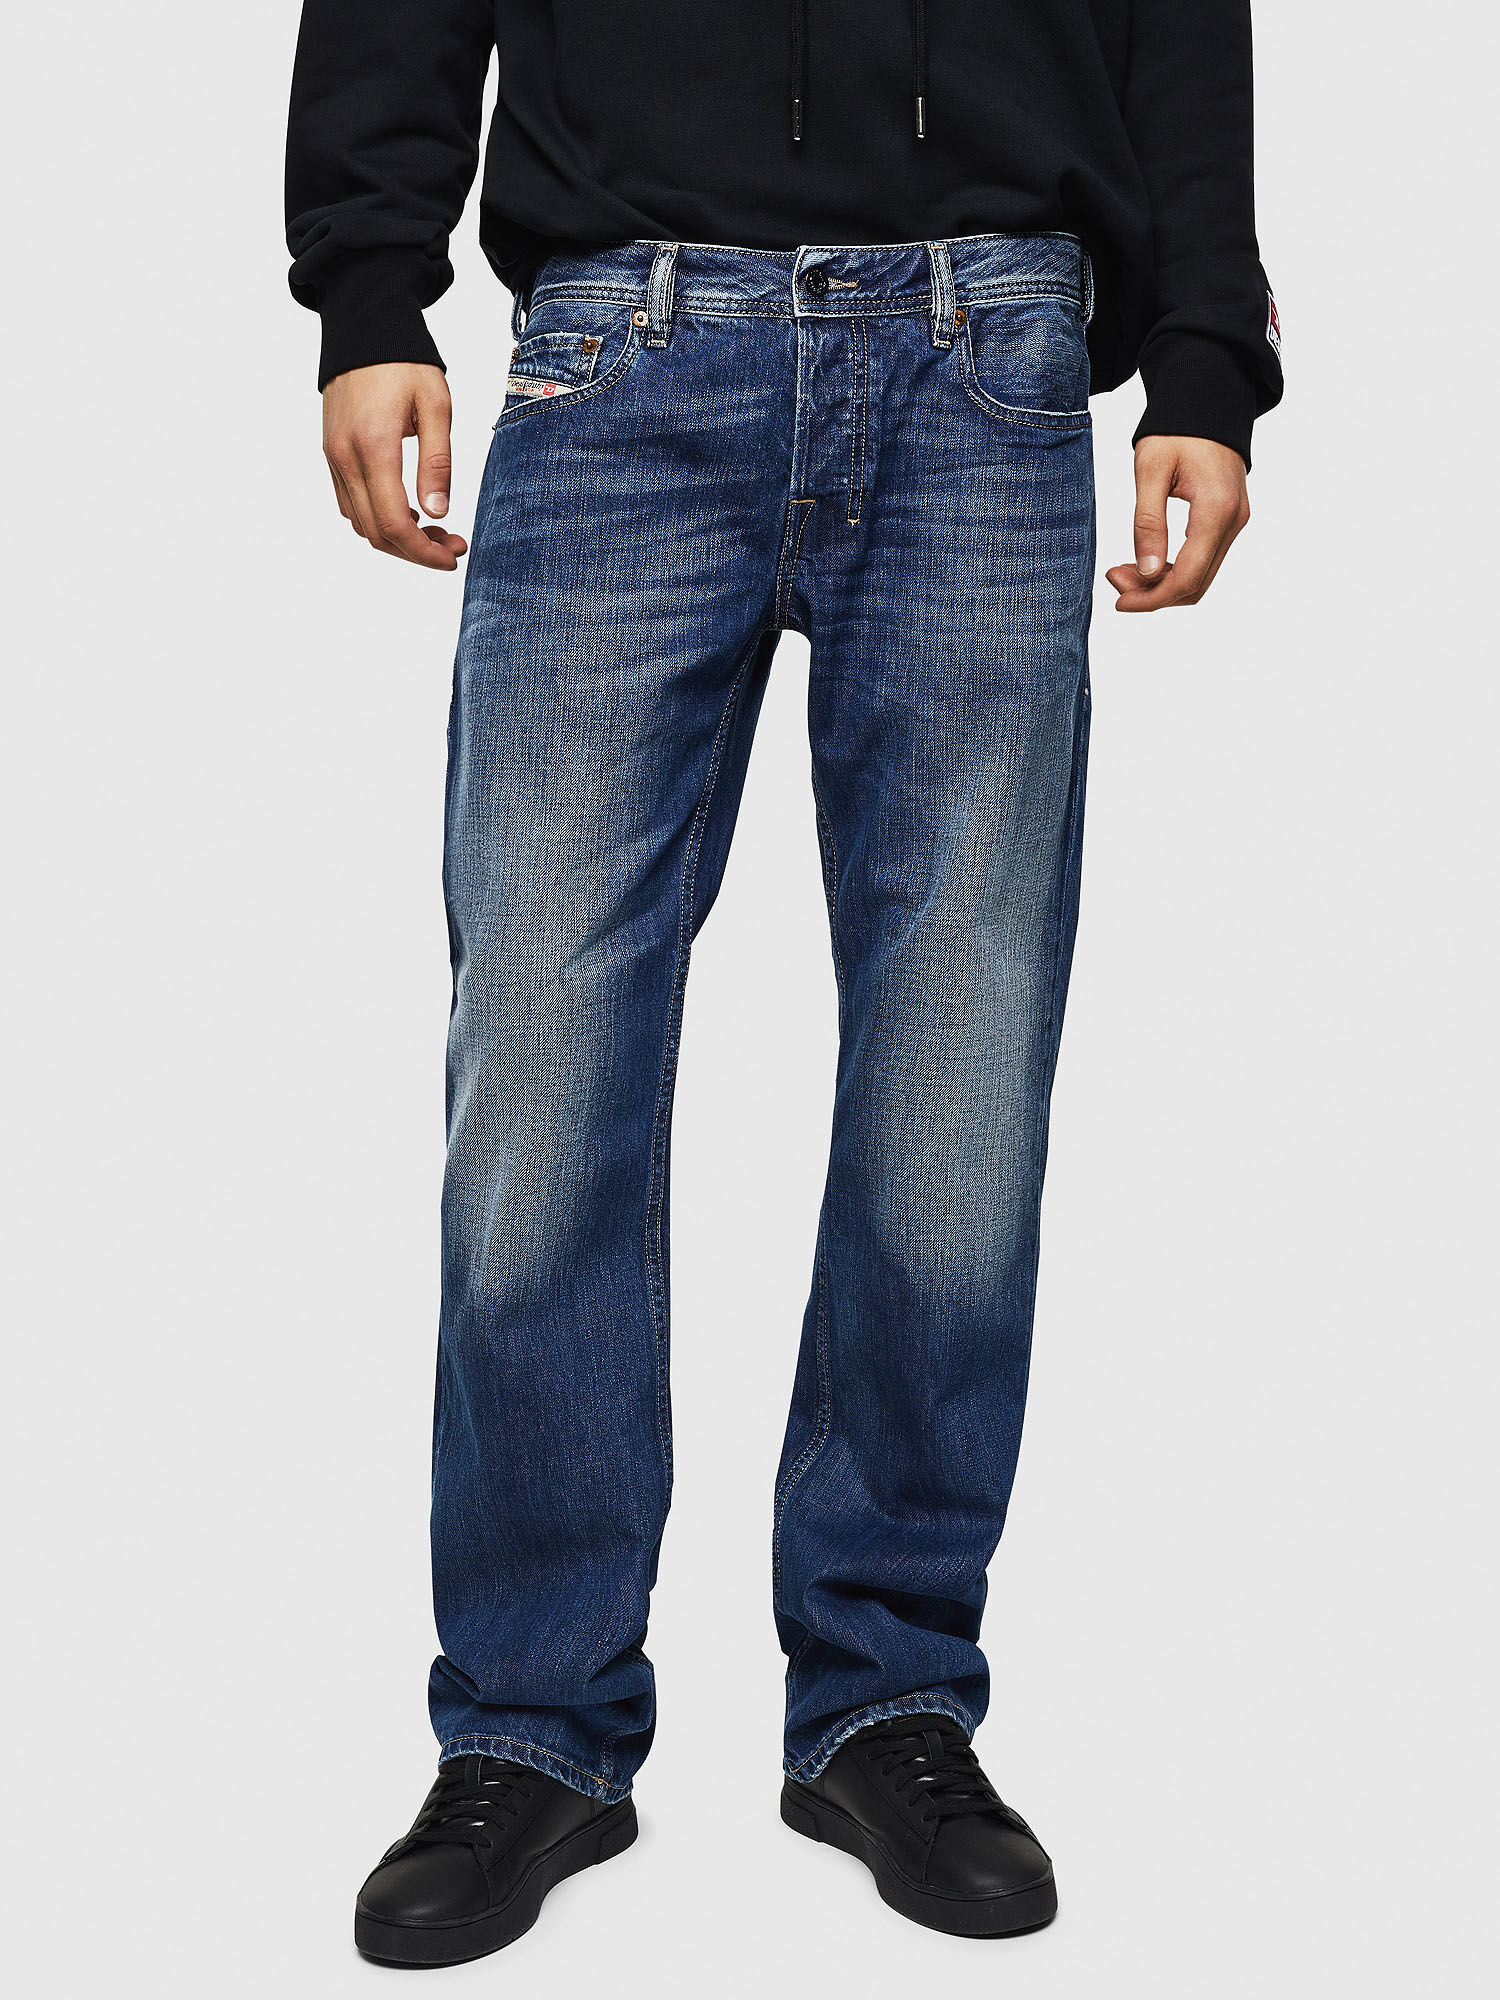 ed hardy brand jeans